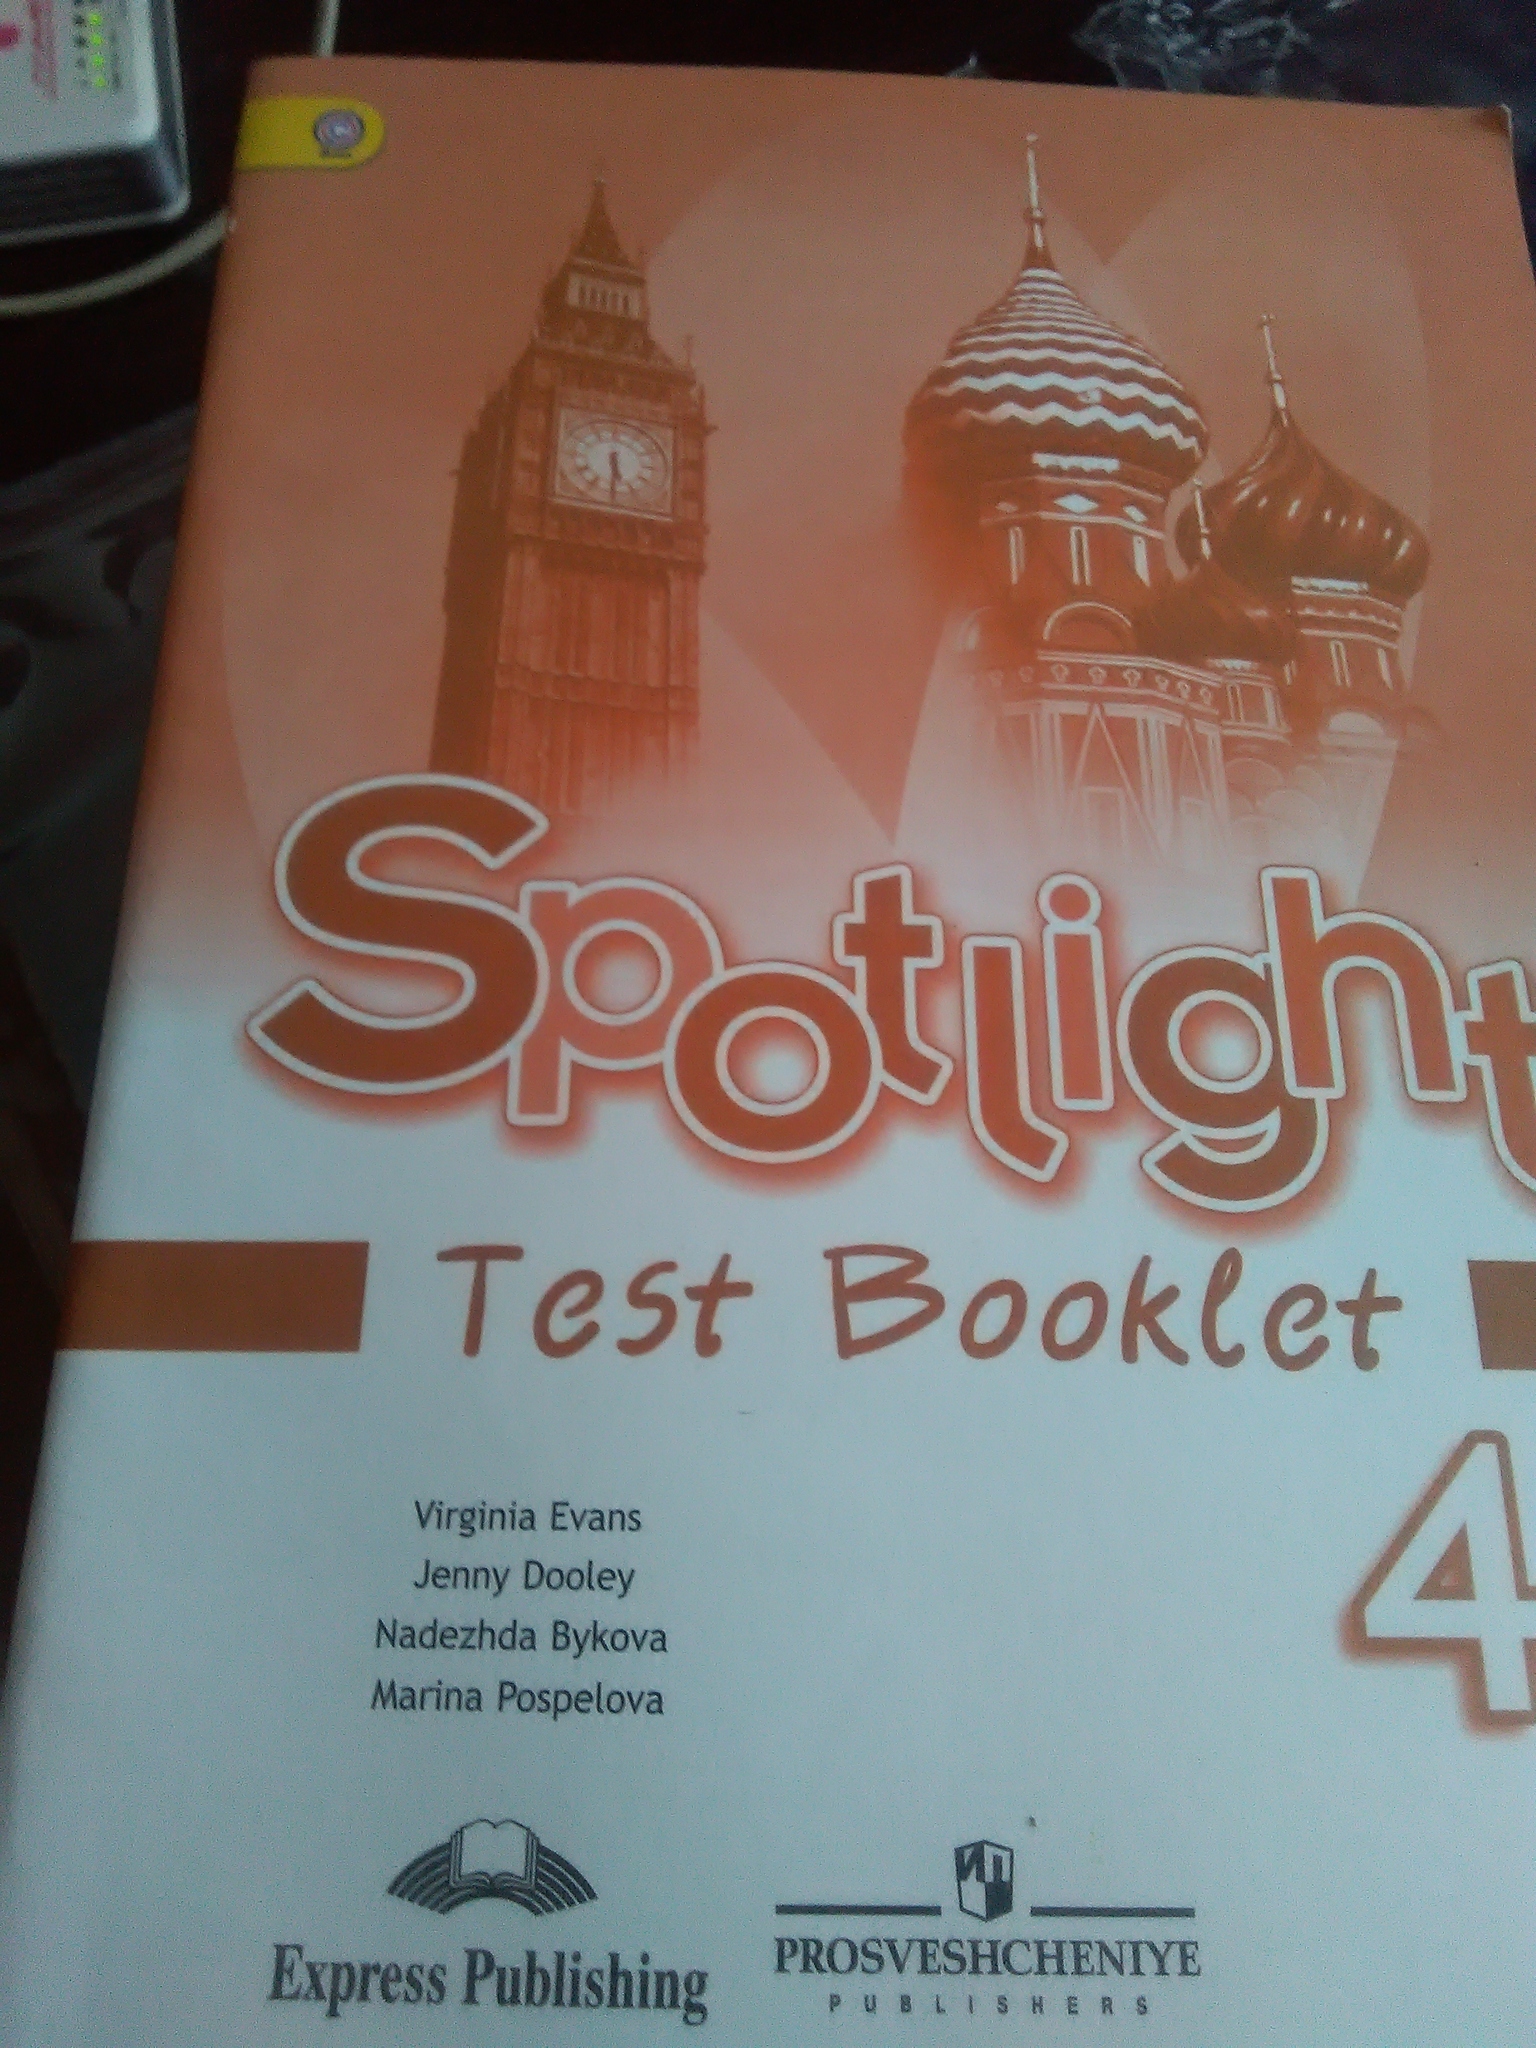 Английский 9 класс spotlight 2020. Спотлайт 4 класс тест буклет. Test booklet 4 класс Spotlight. Spotlight 4 Test booklet английский. Спотлайт 4 Test booklet.